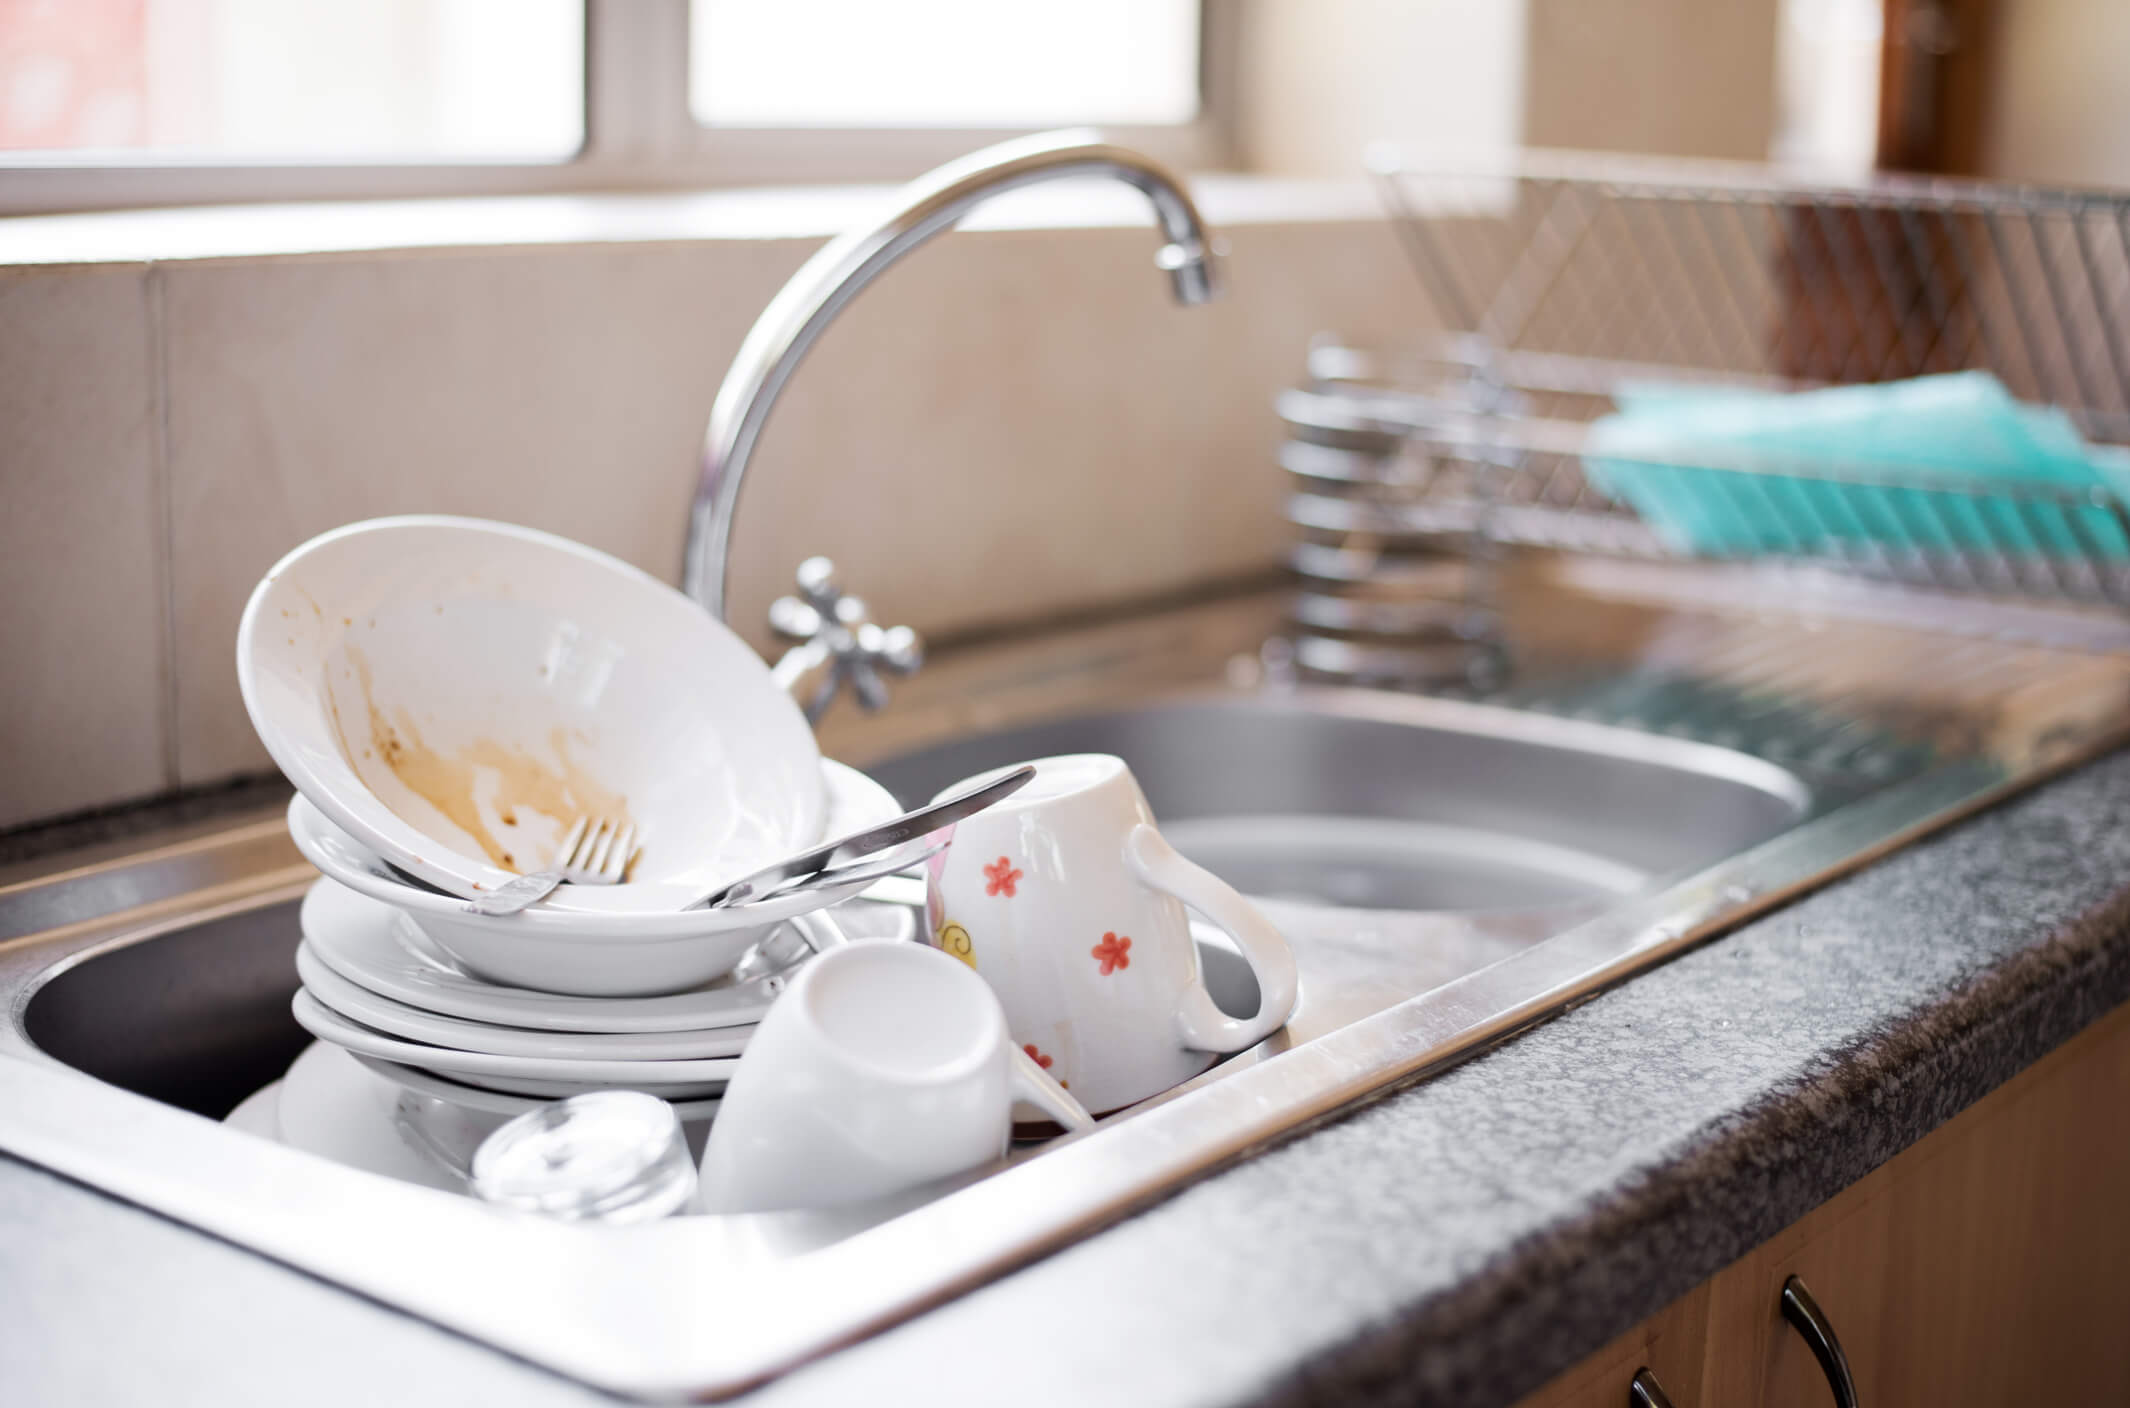 sewage backup kitchen sink dishes